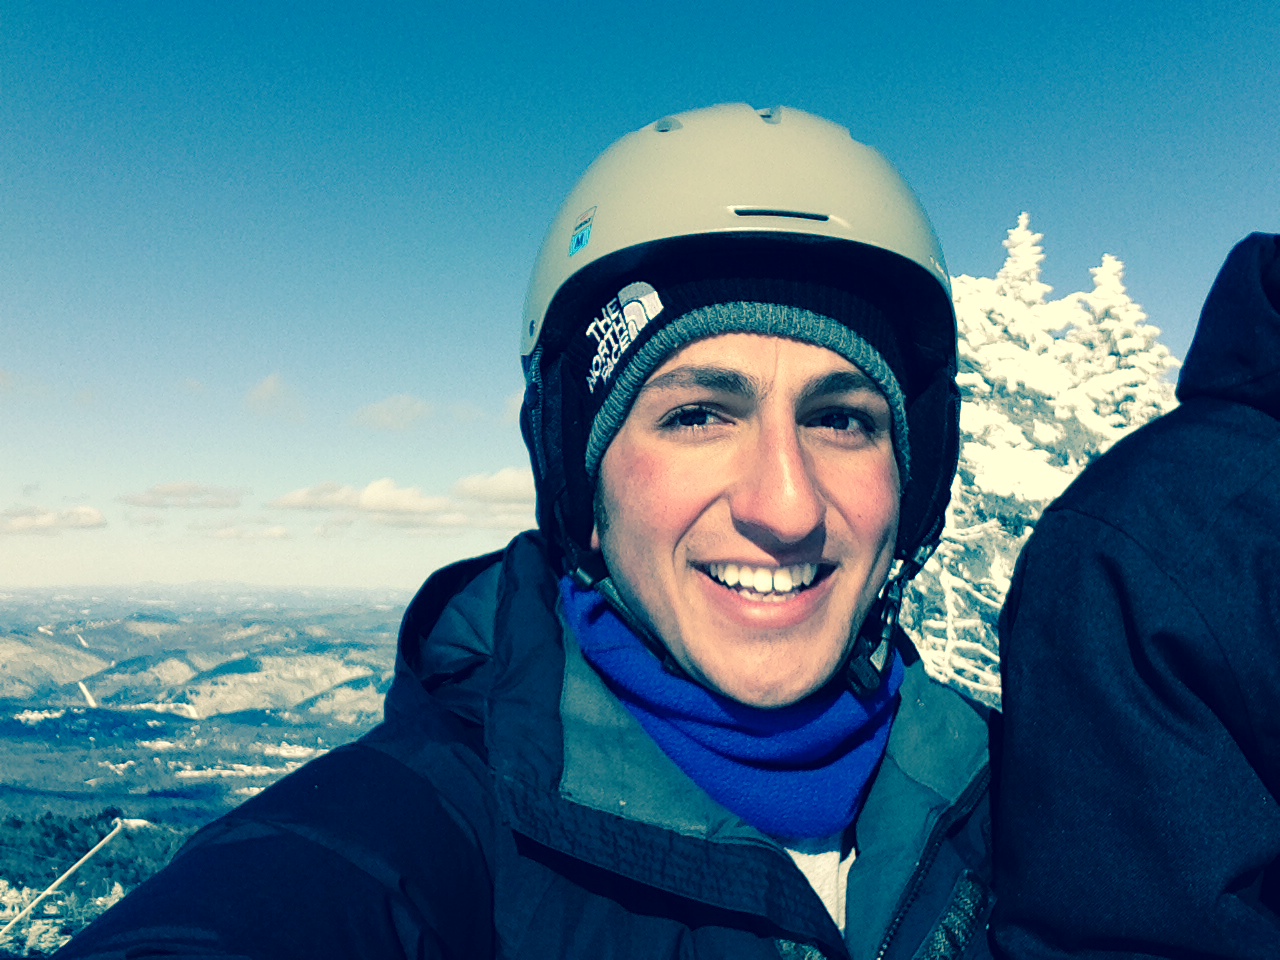 Aaron Kattan, on the LCM Student Government organized trip to the slopes of Killington.